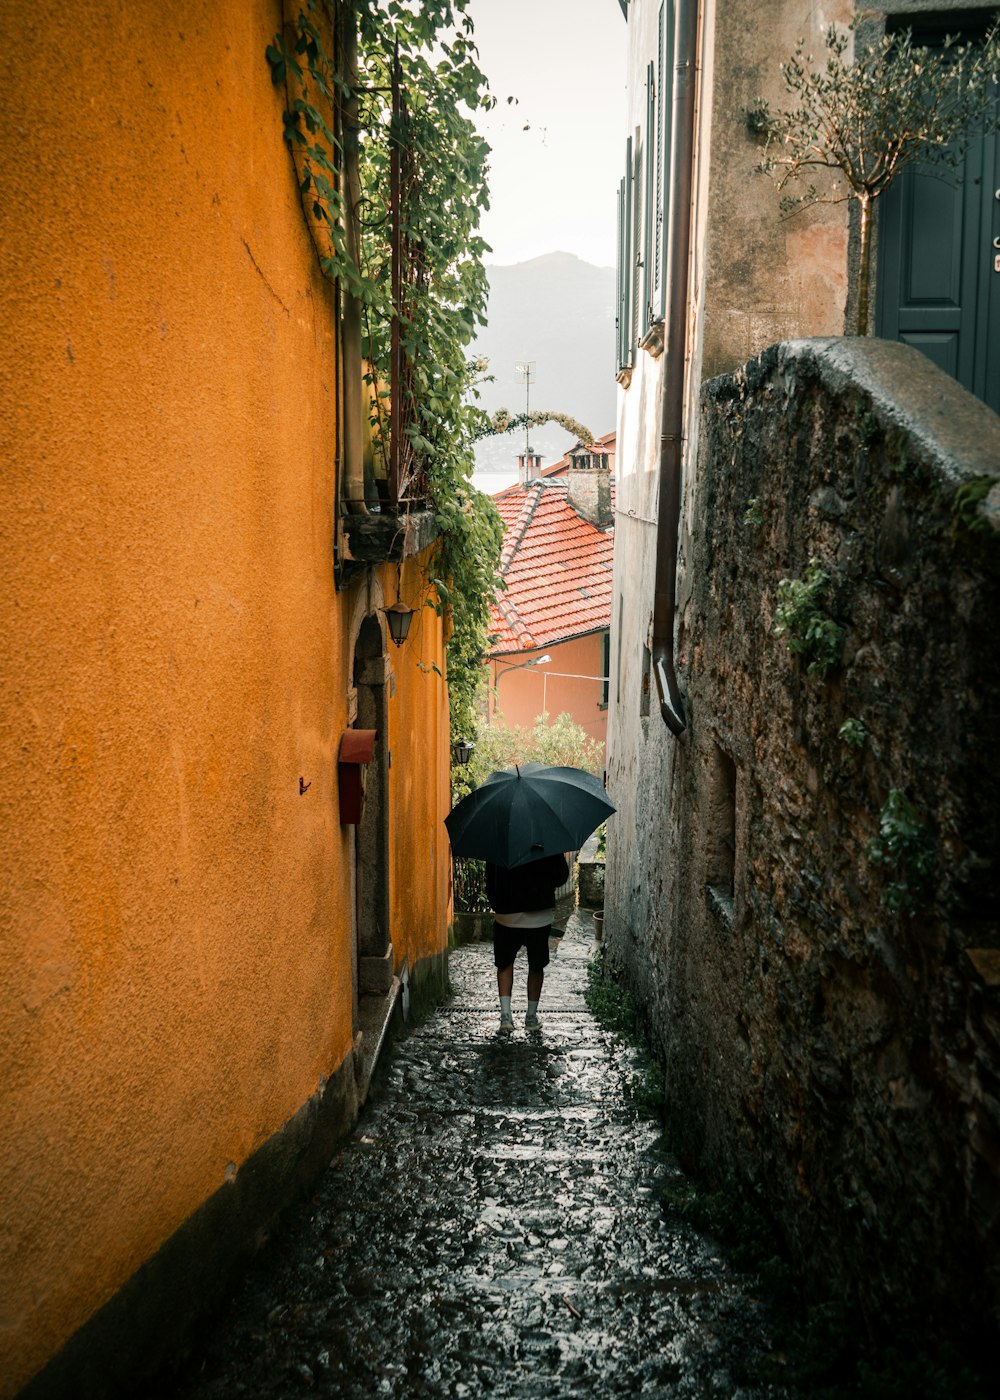 a person with an umbrella walks down a cobblestone street